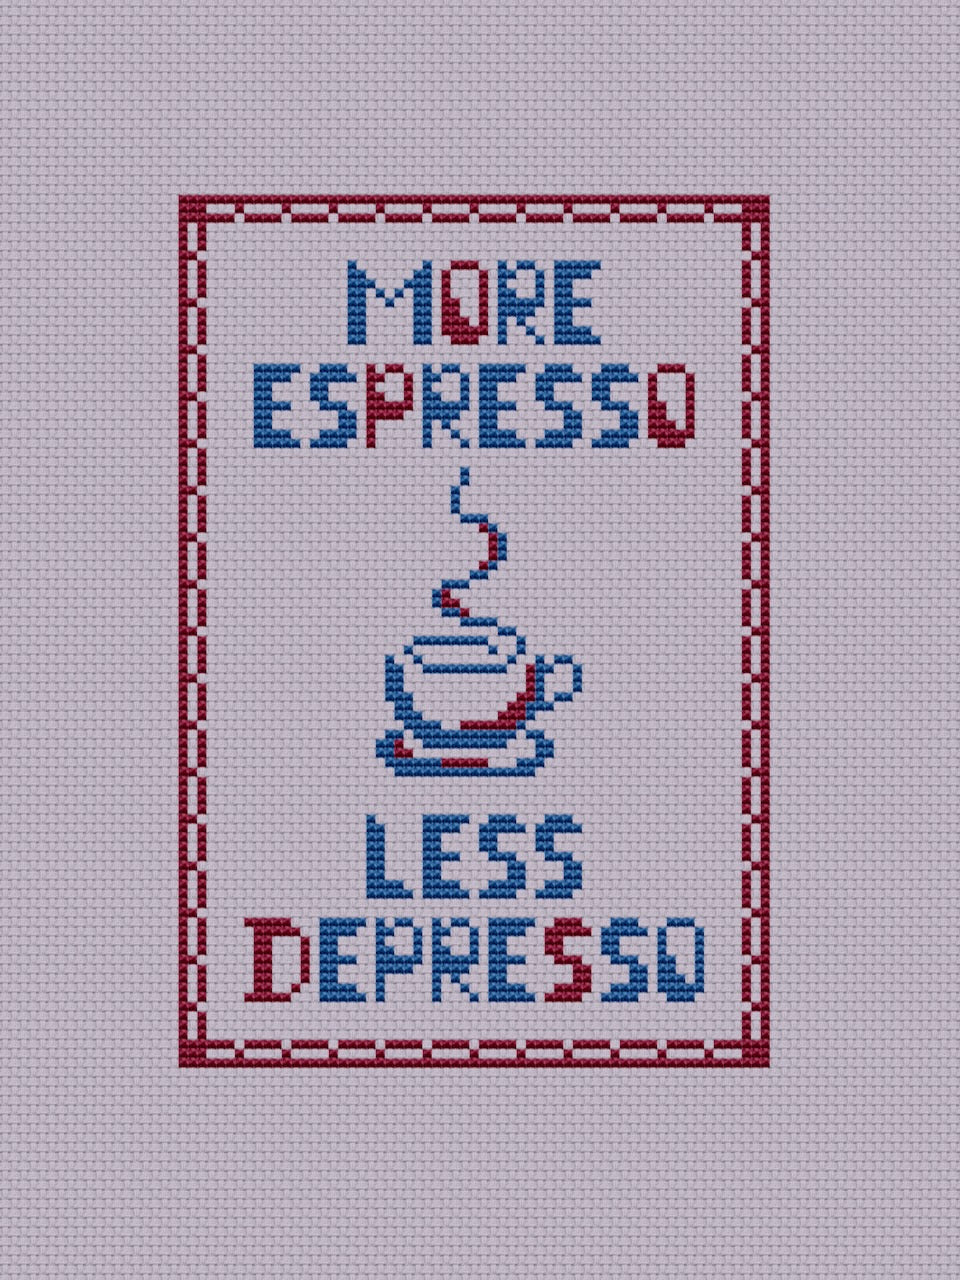 More espresso less depresso -2